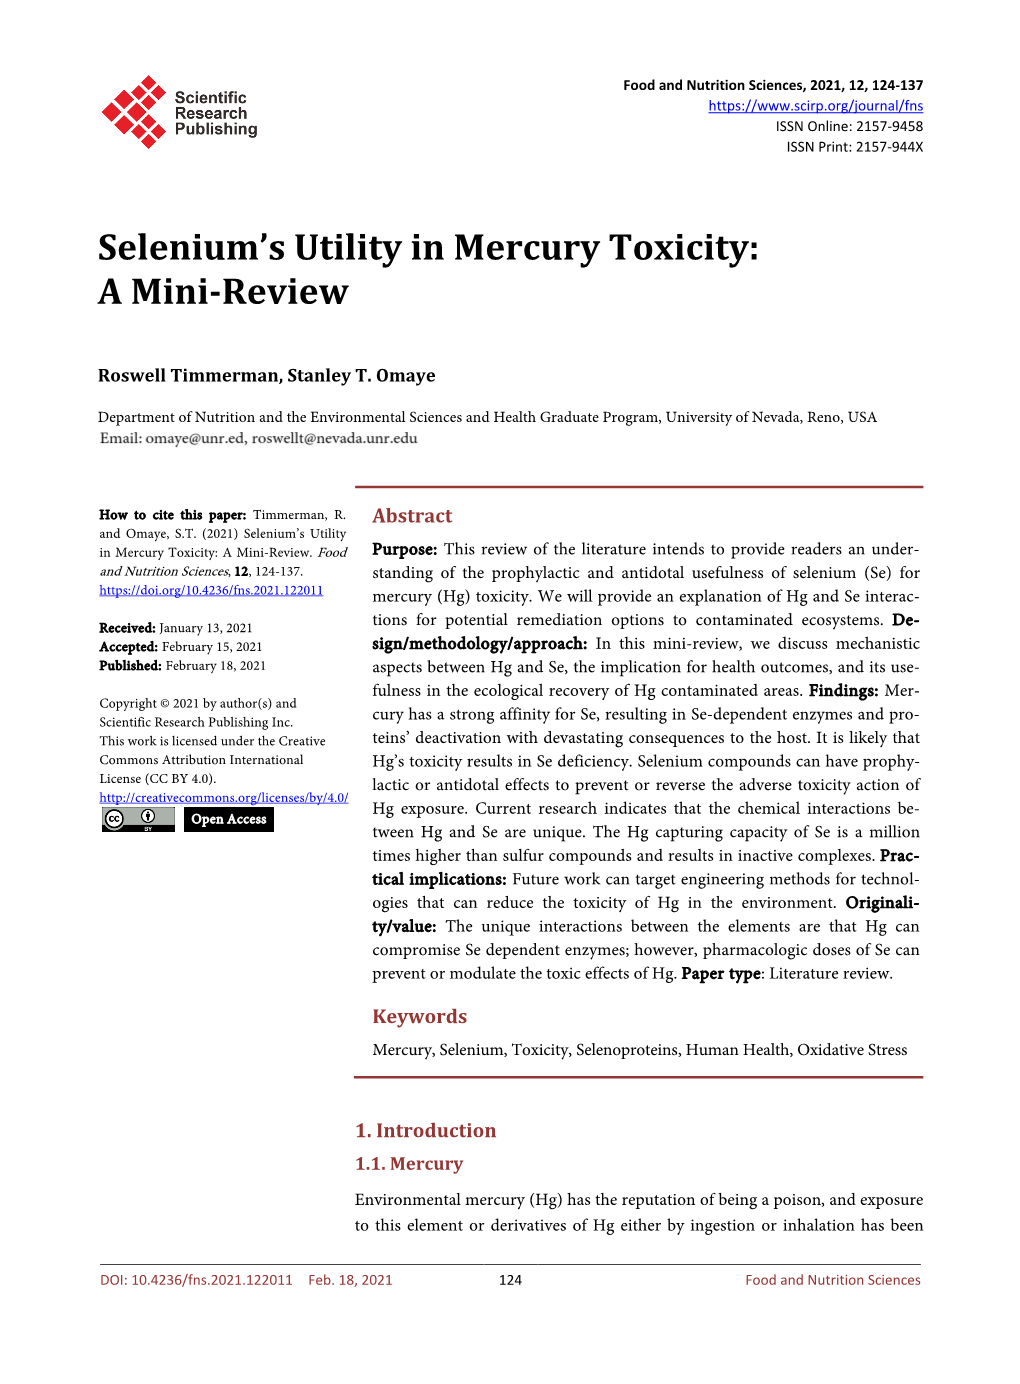 Selenium's Utility in Mercury Toxicity: a Mini-Review